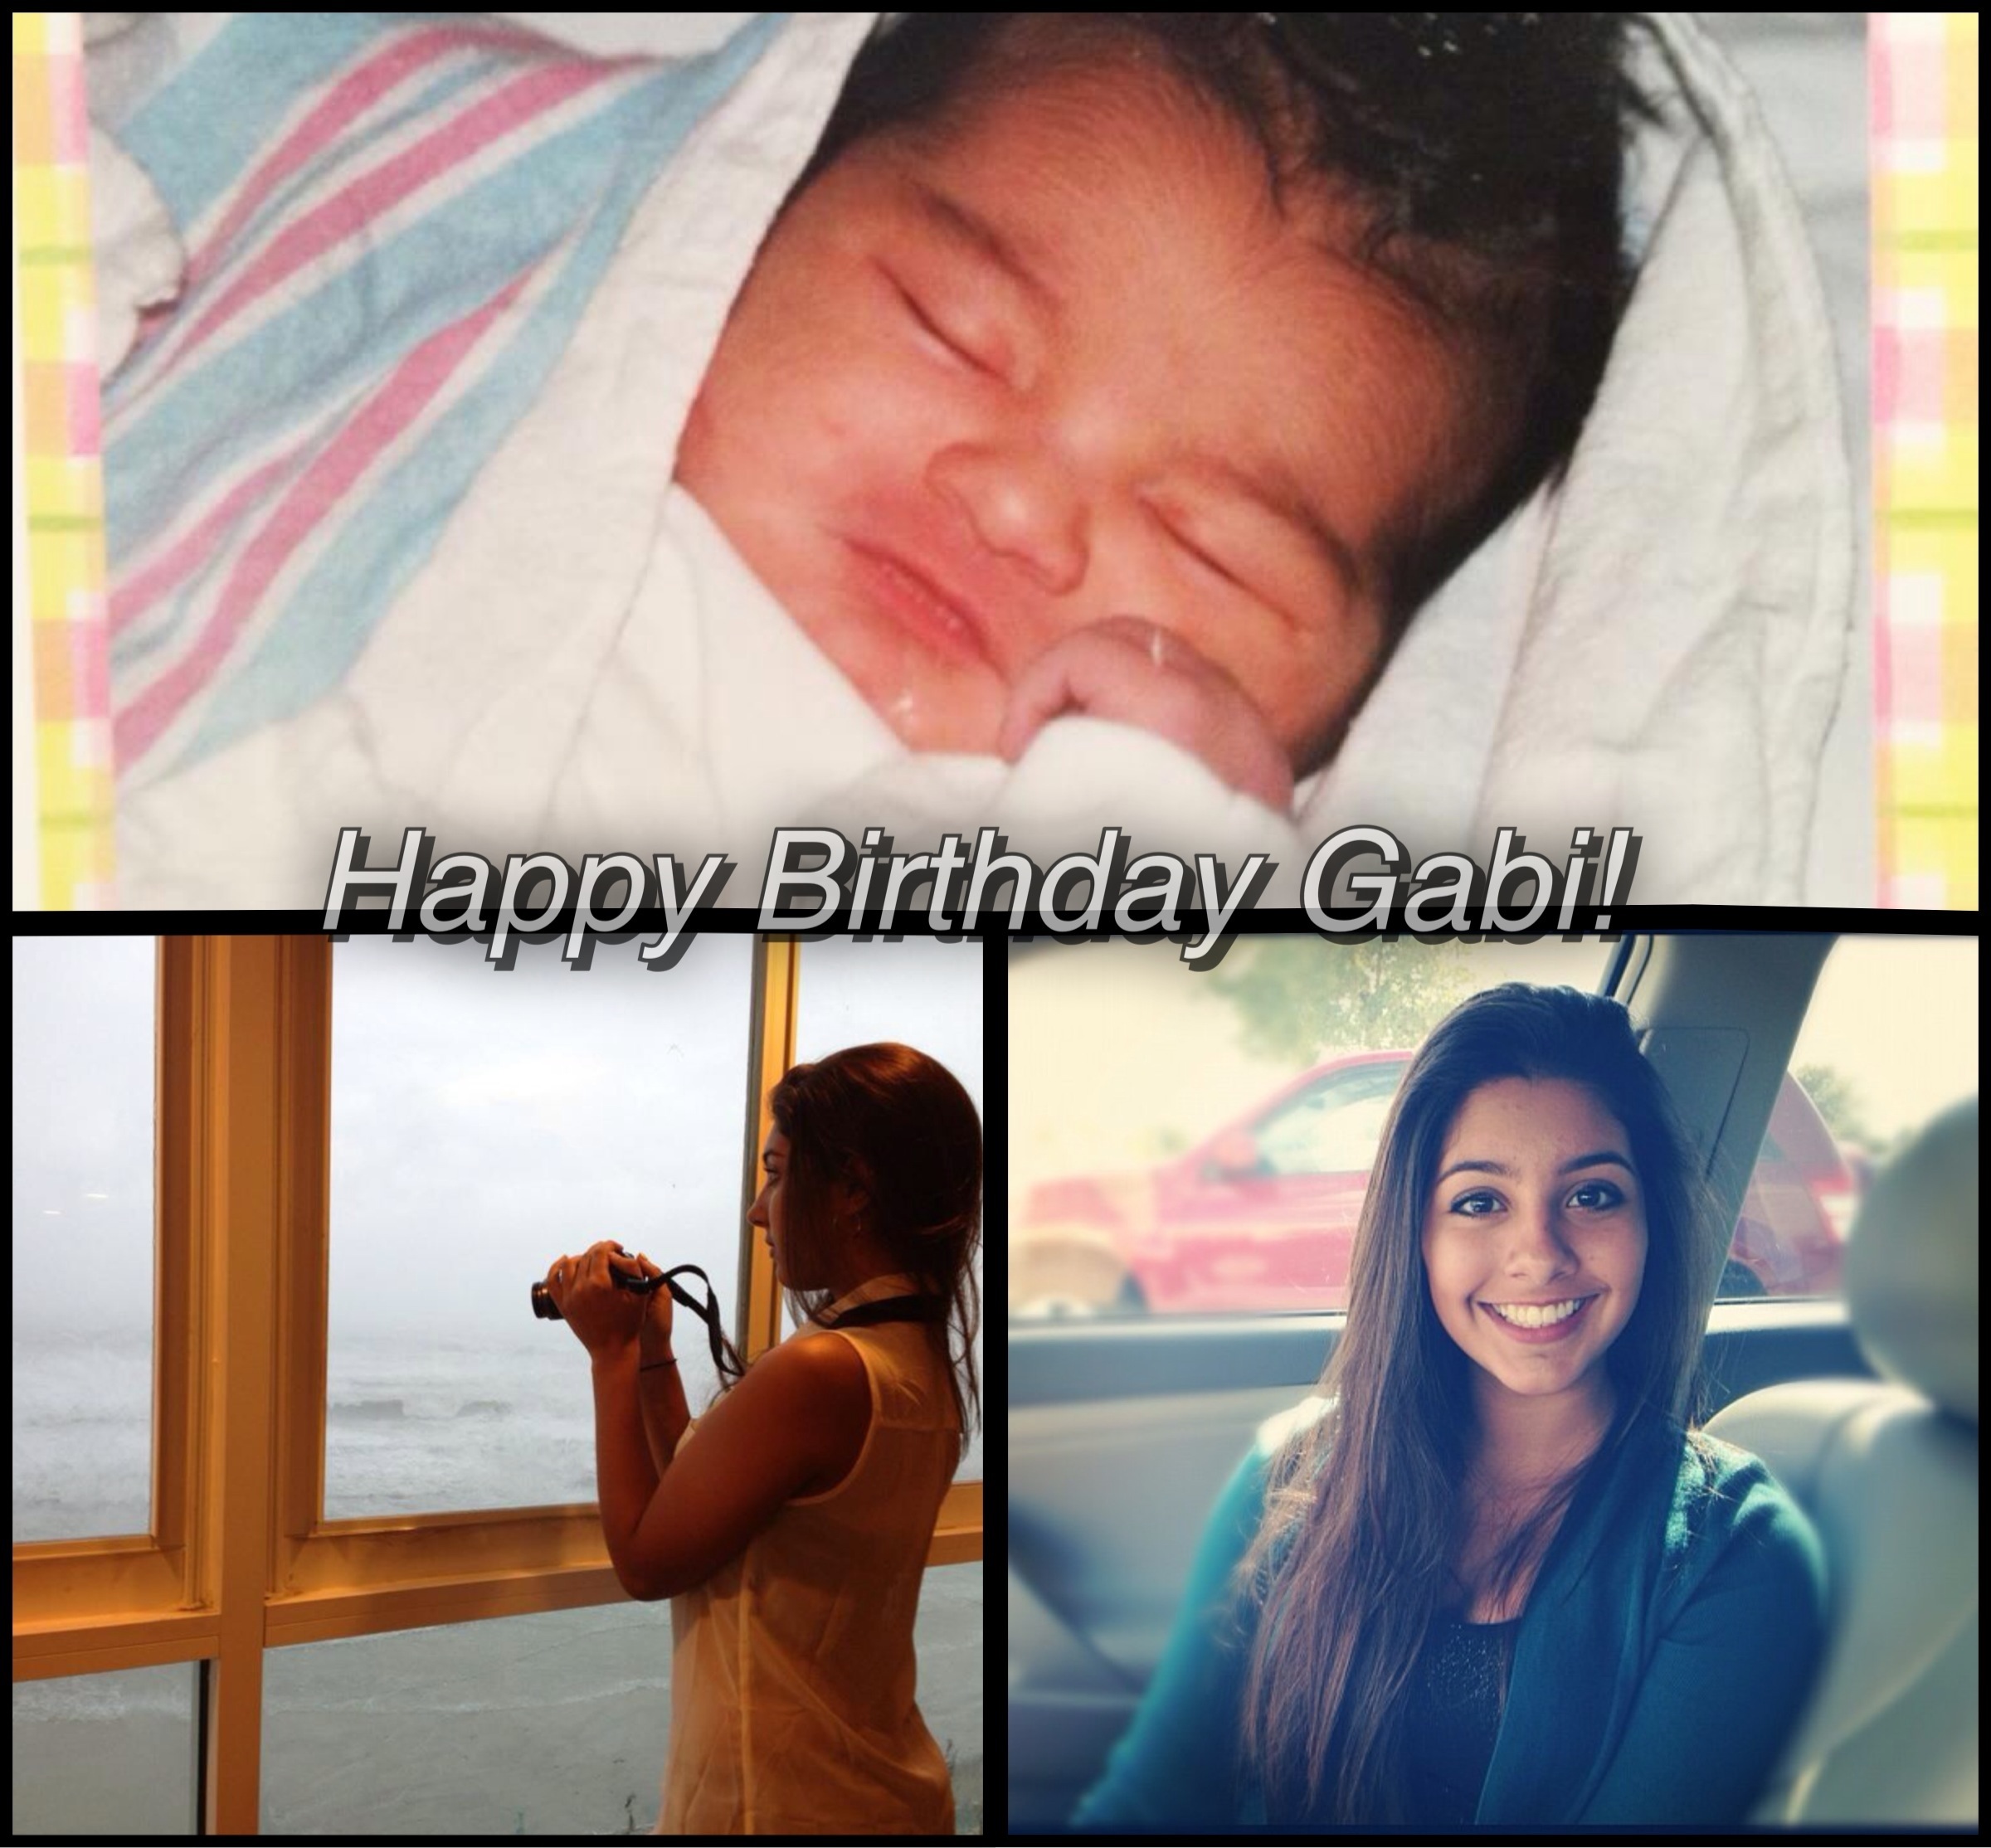 Gabi turns 15